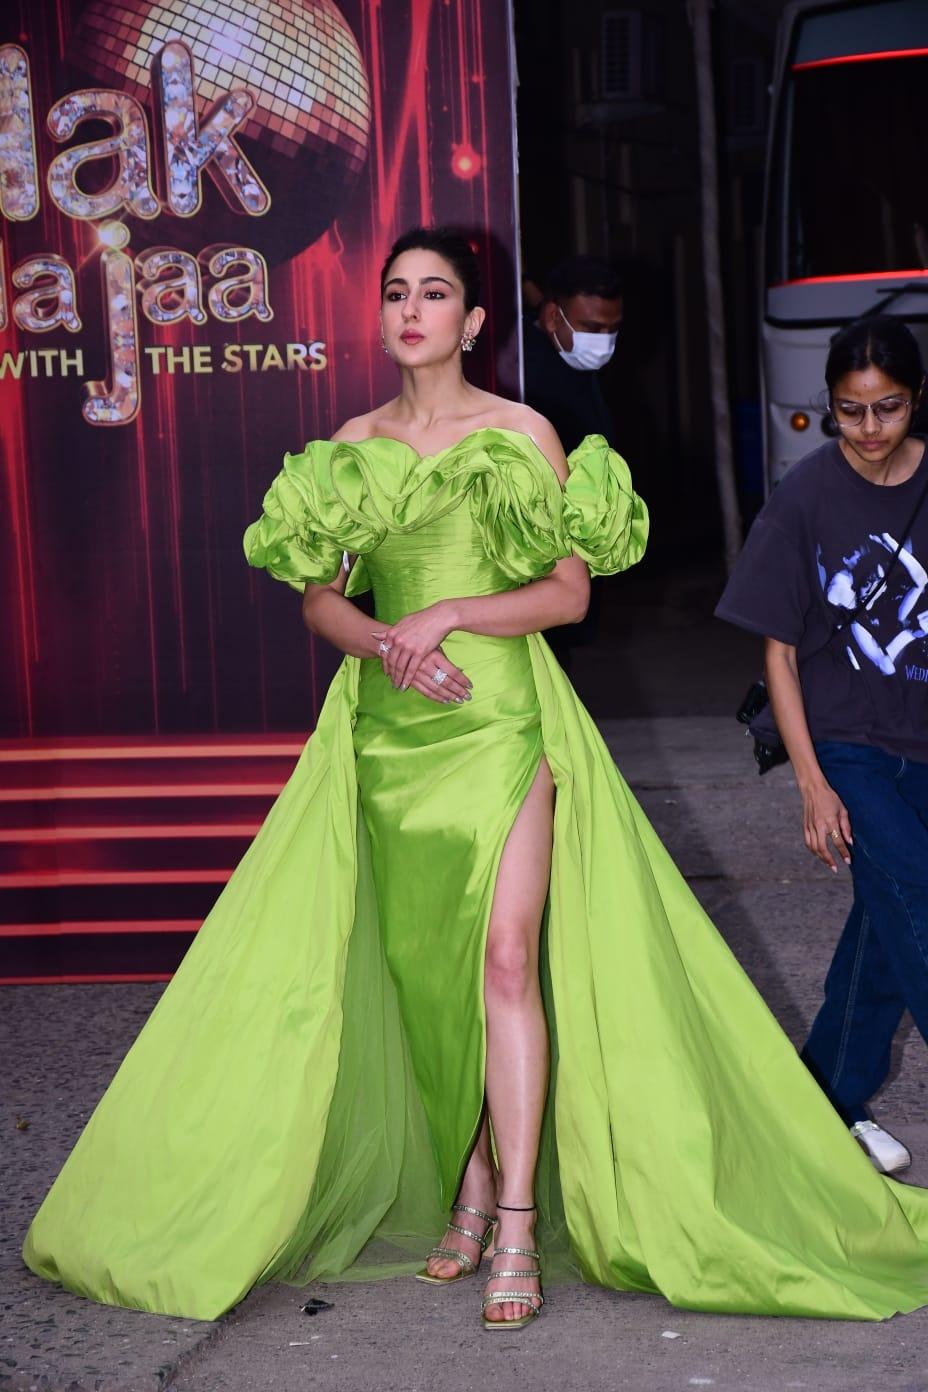 Sara Ali Khan joined Vijay Varma on JDJ 11 sets. Sara was dressed in an extravagant green dress